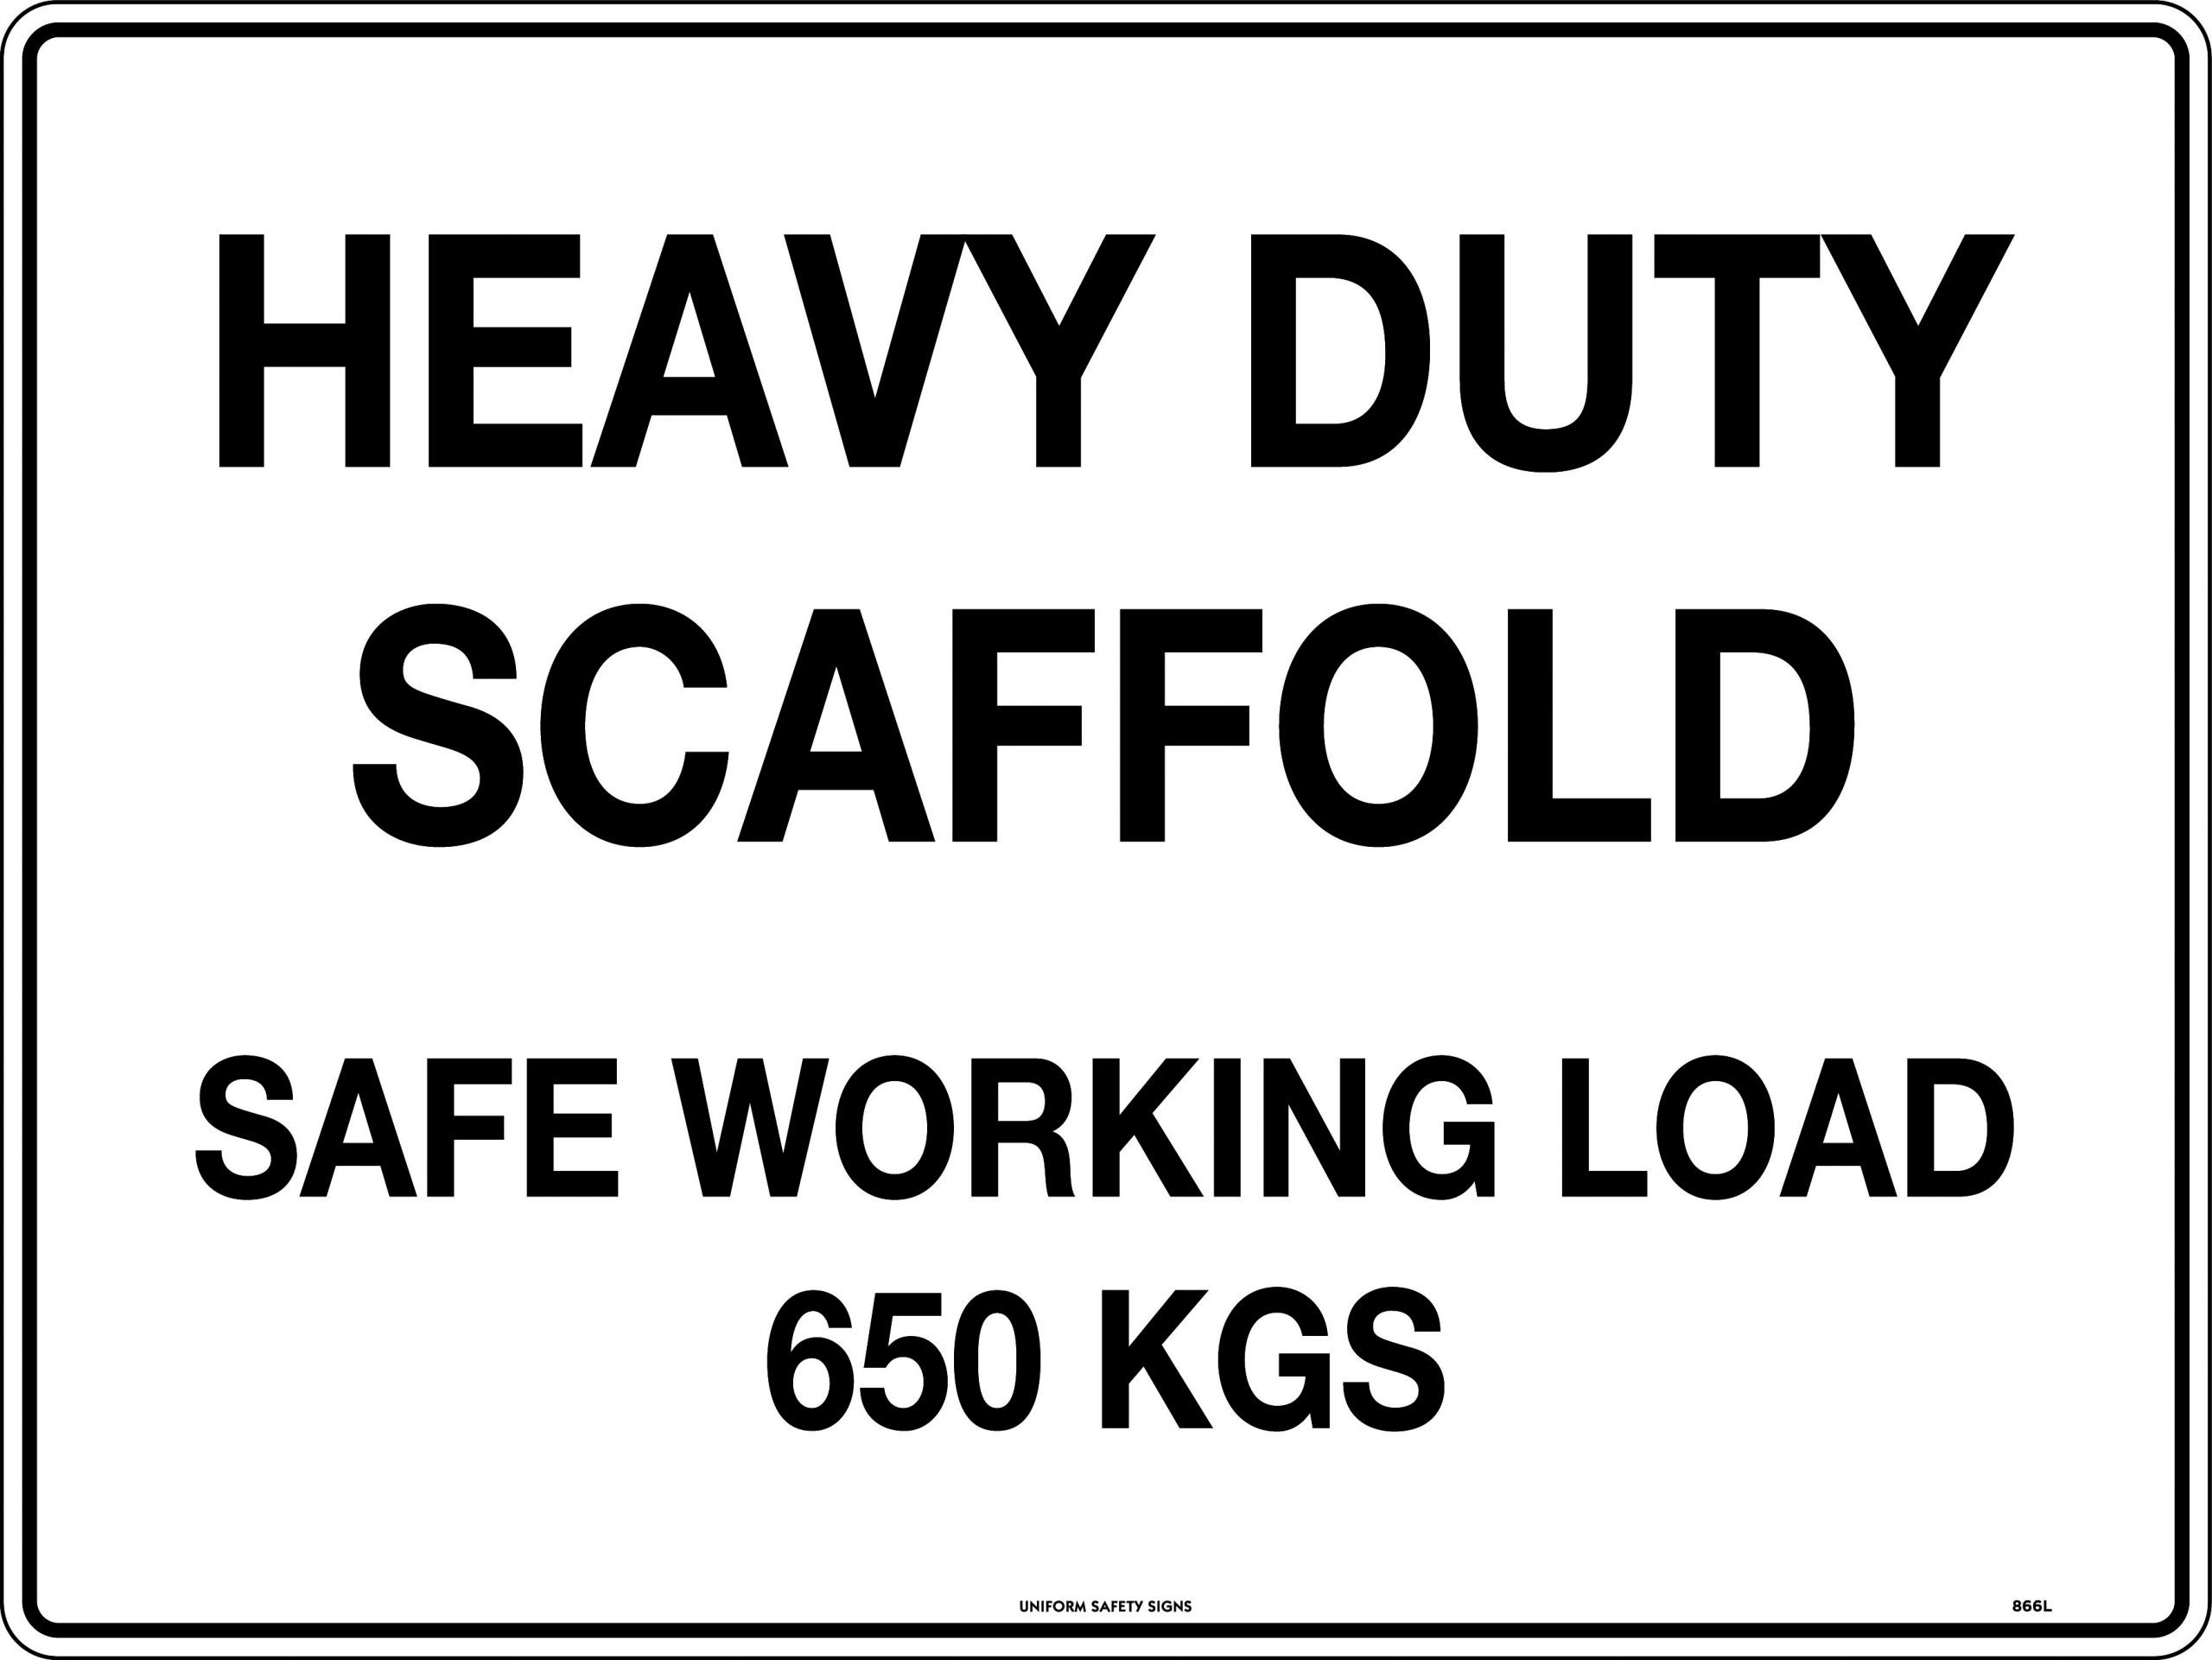 UNIFORM SAFETY 300X225MM METAL HEAVY DUTY SCAFFOLD SAFE WORKING LOAD 6